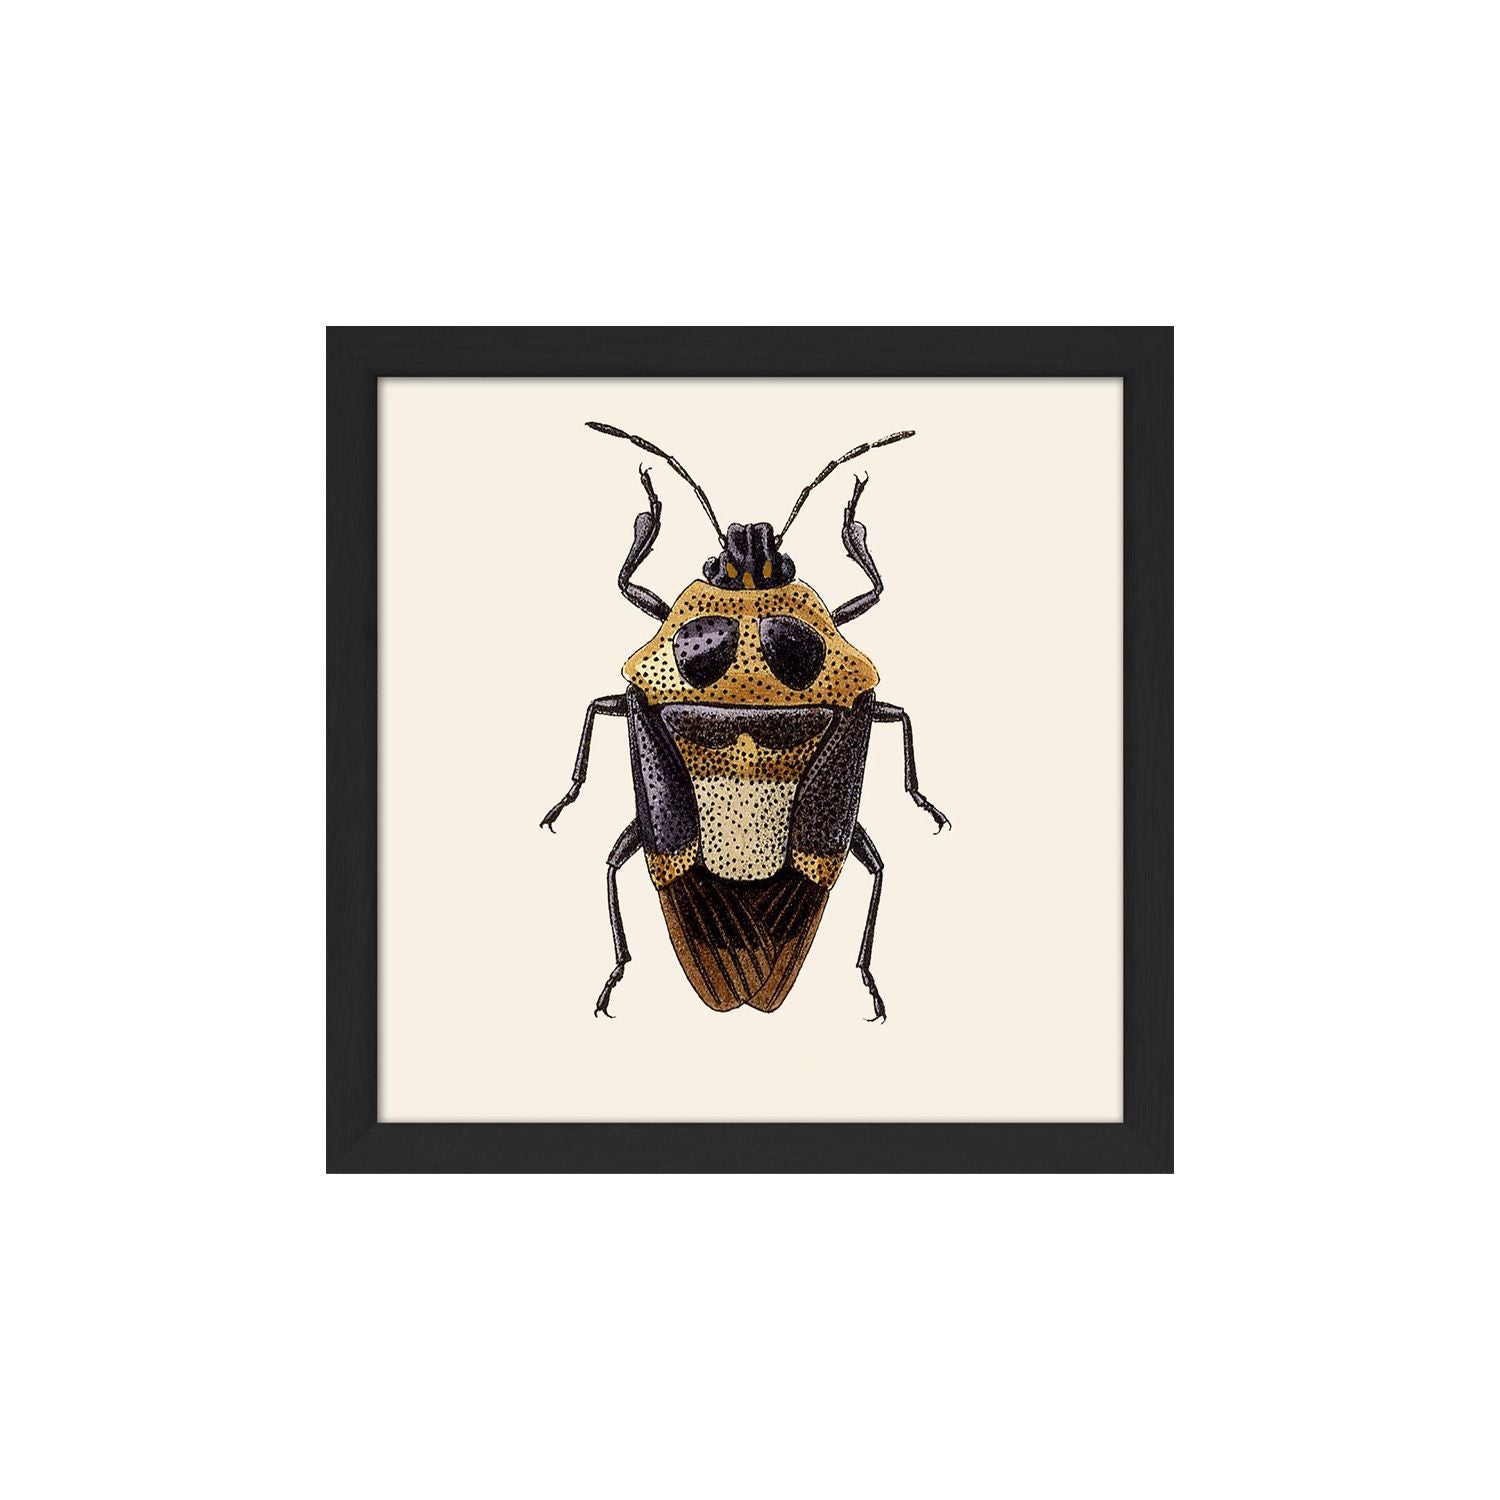 No. SQ116 Beetle With Black Frame - 15cm x 15cm